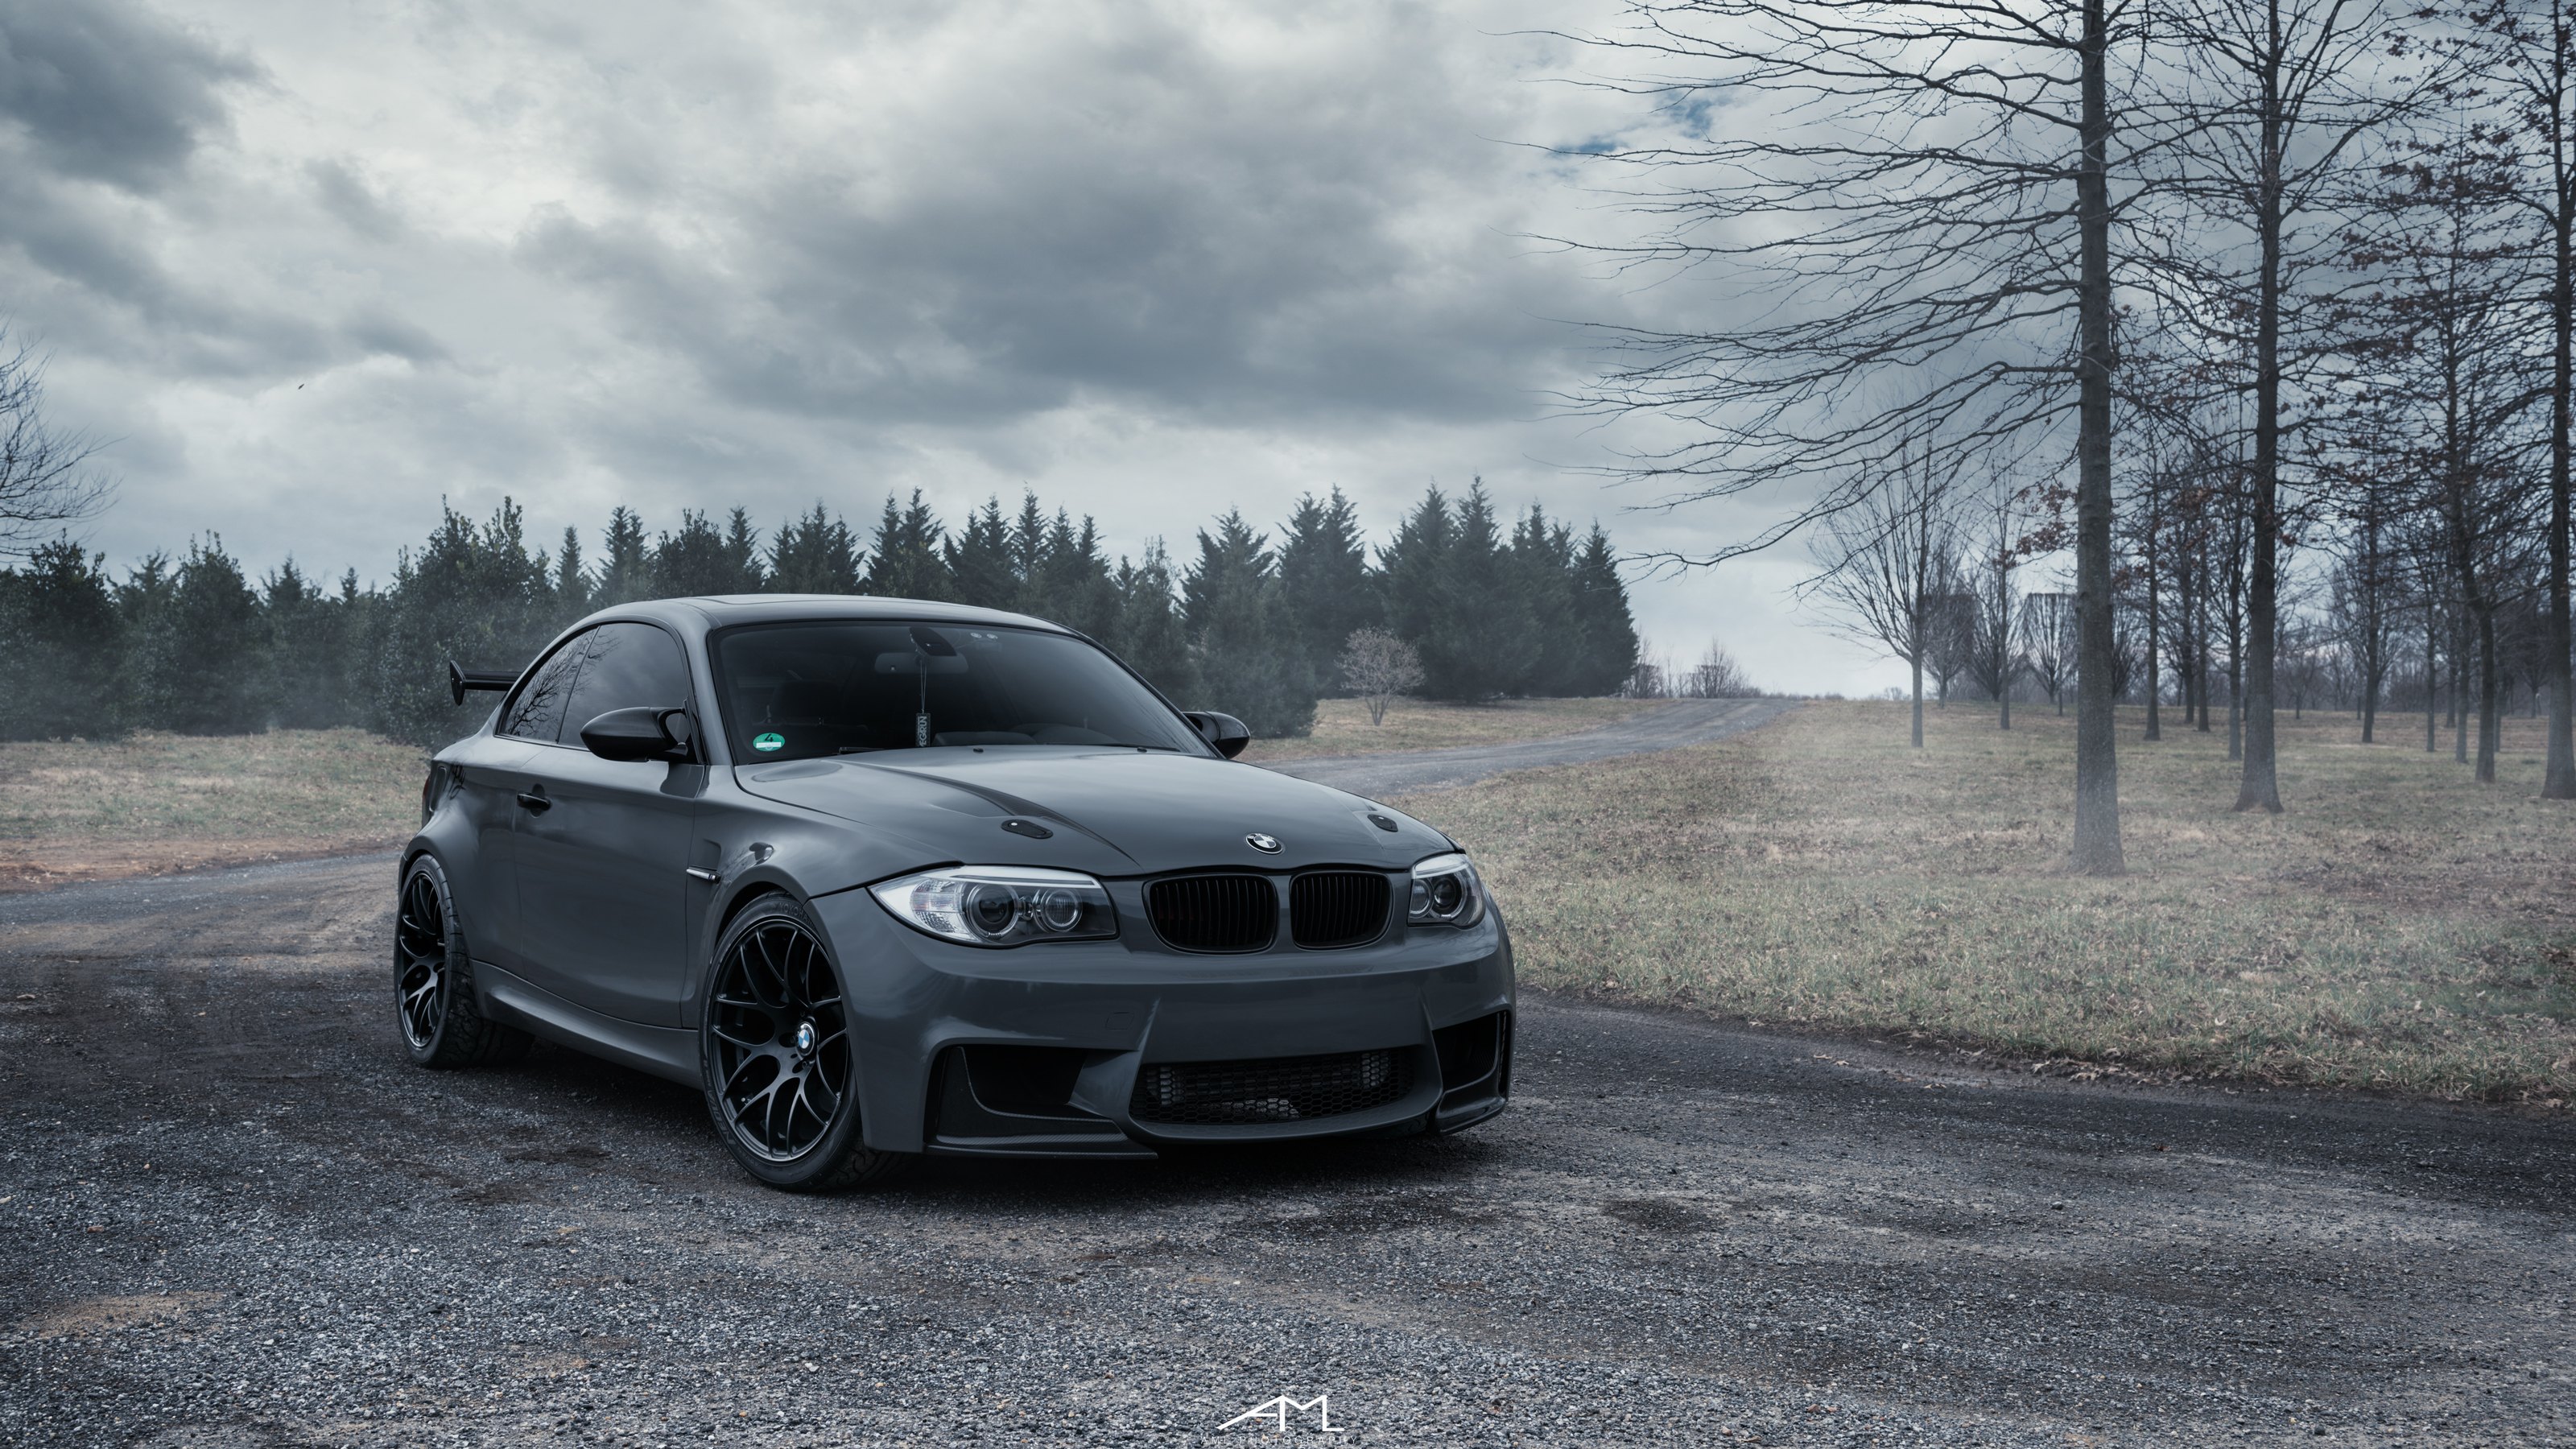 Gray BMW 1-Series with Dark Smoke Headlights - Photo by Arlen Liverman